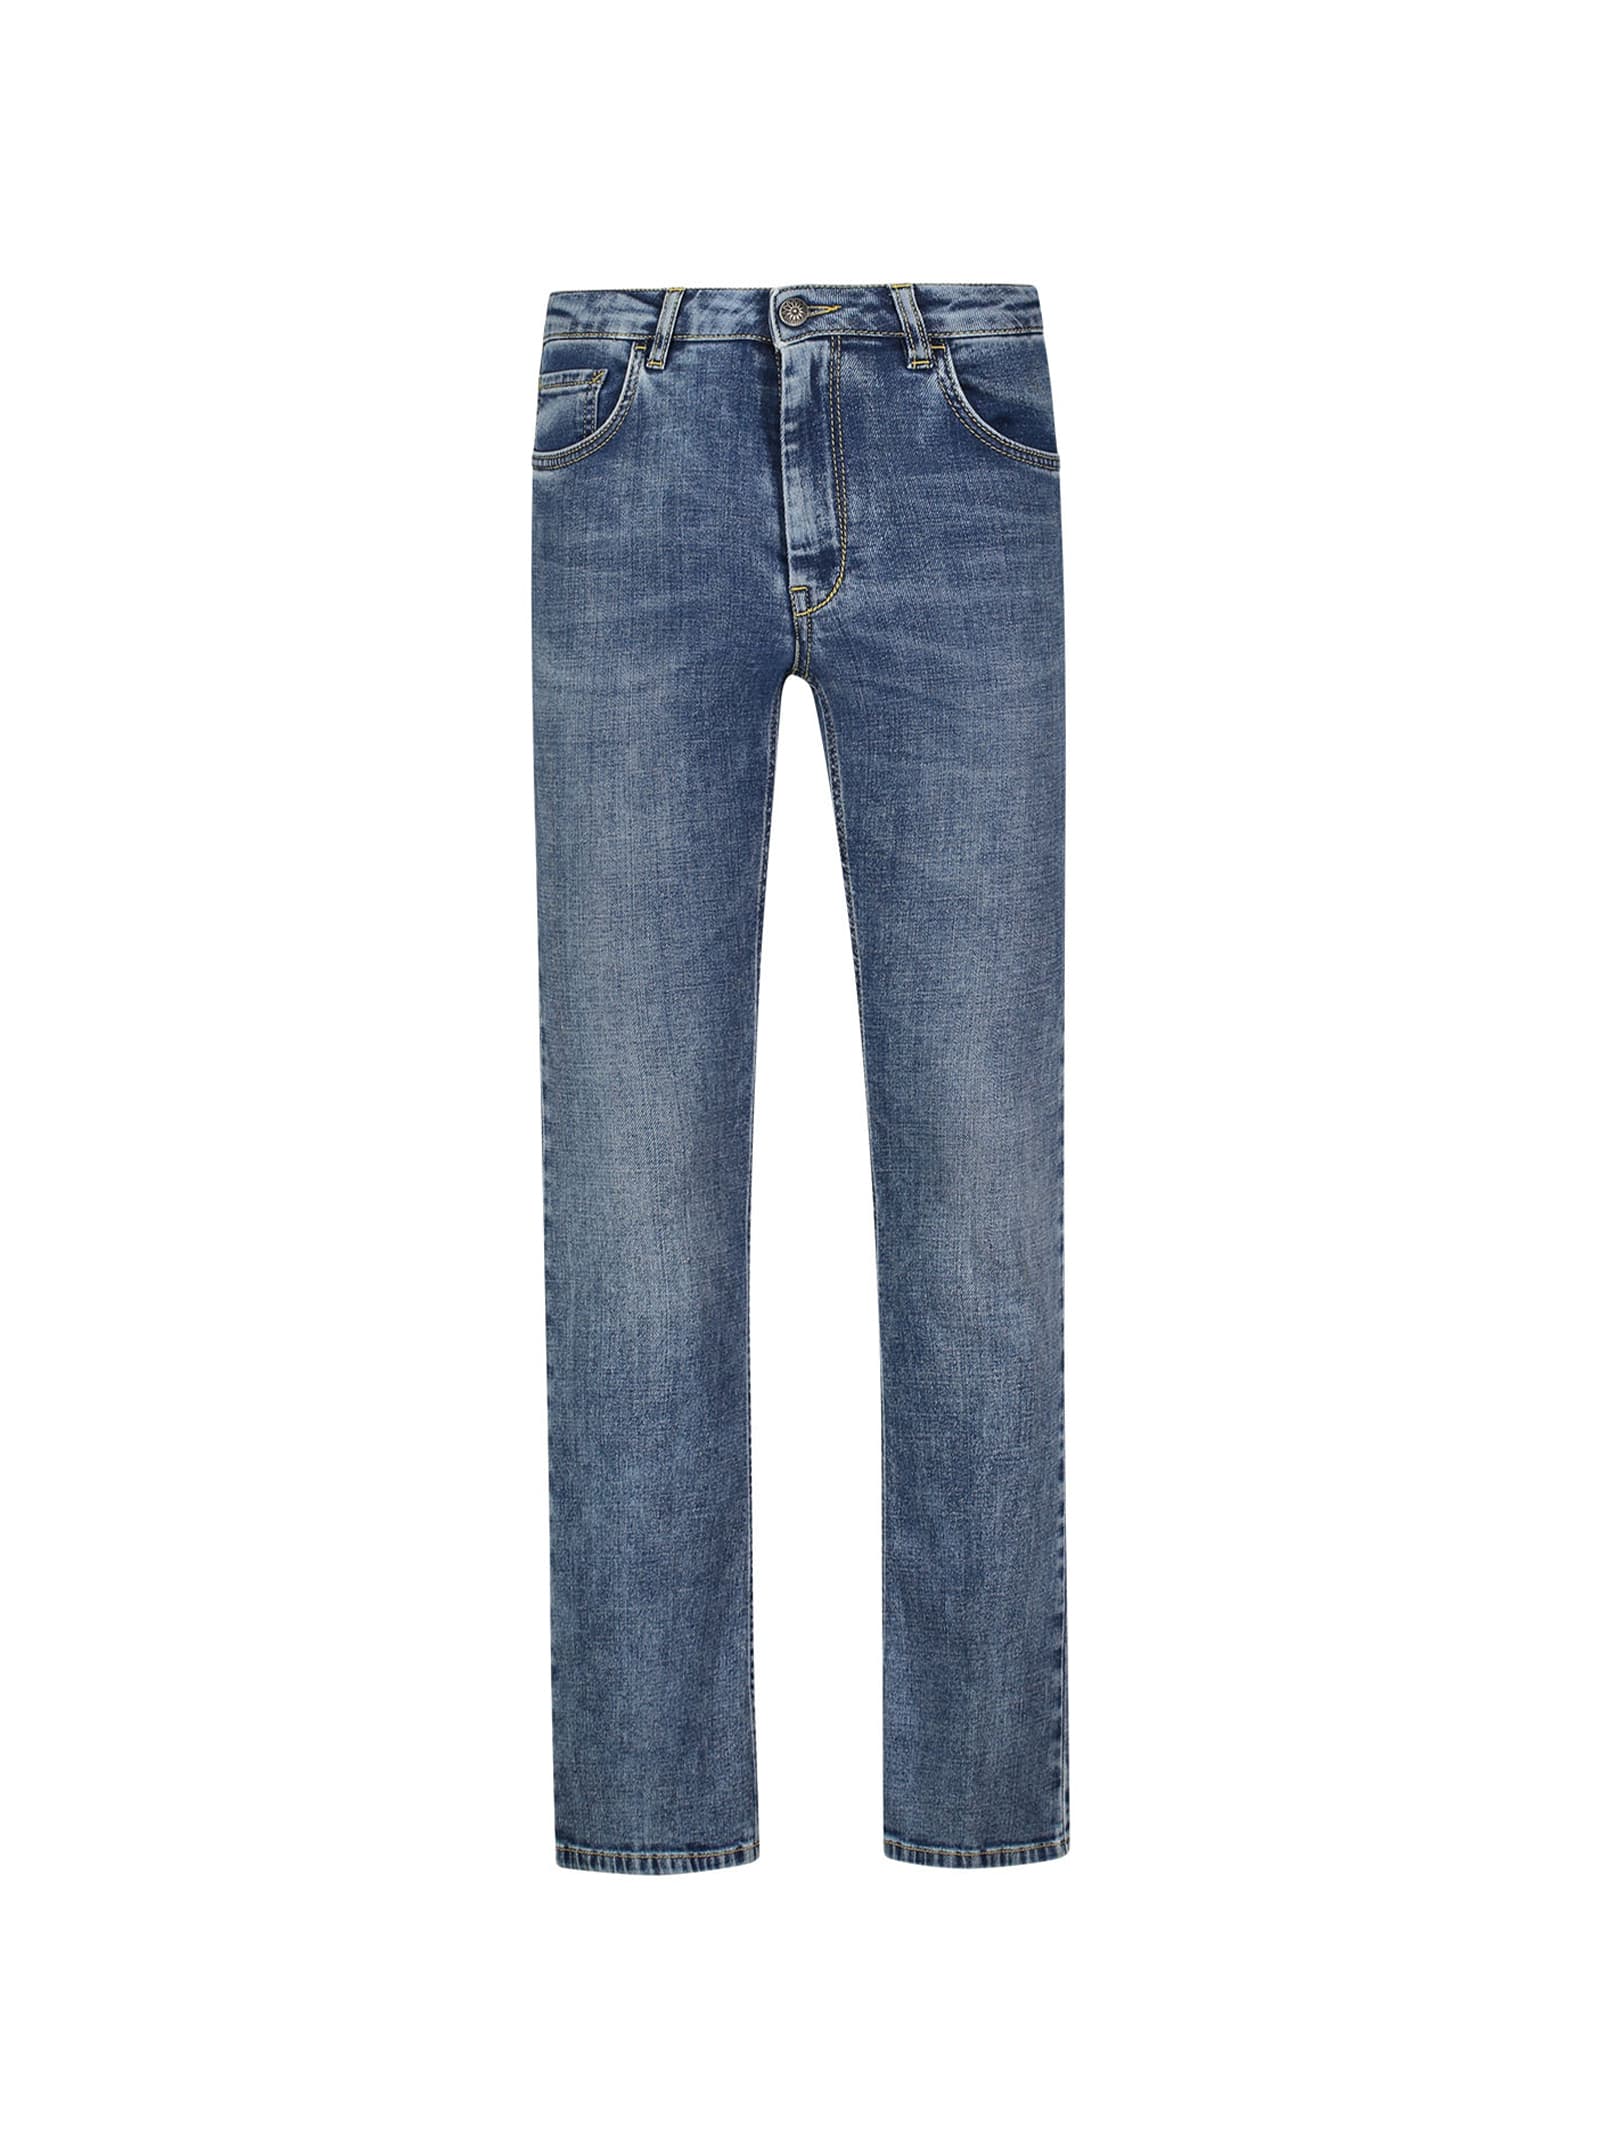 Re-HasH Slim Fit Jeans In Blue Denim